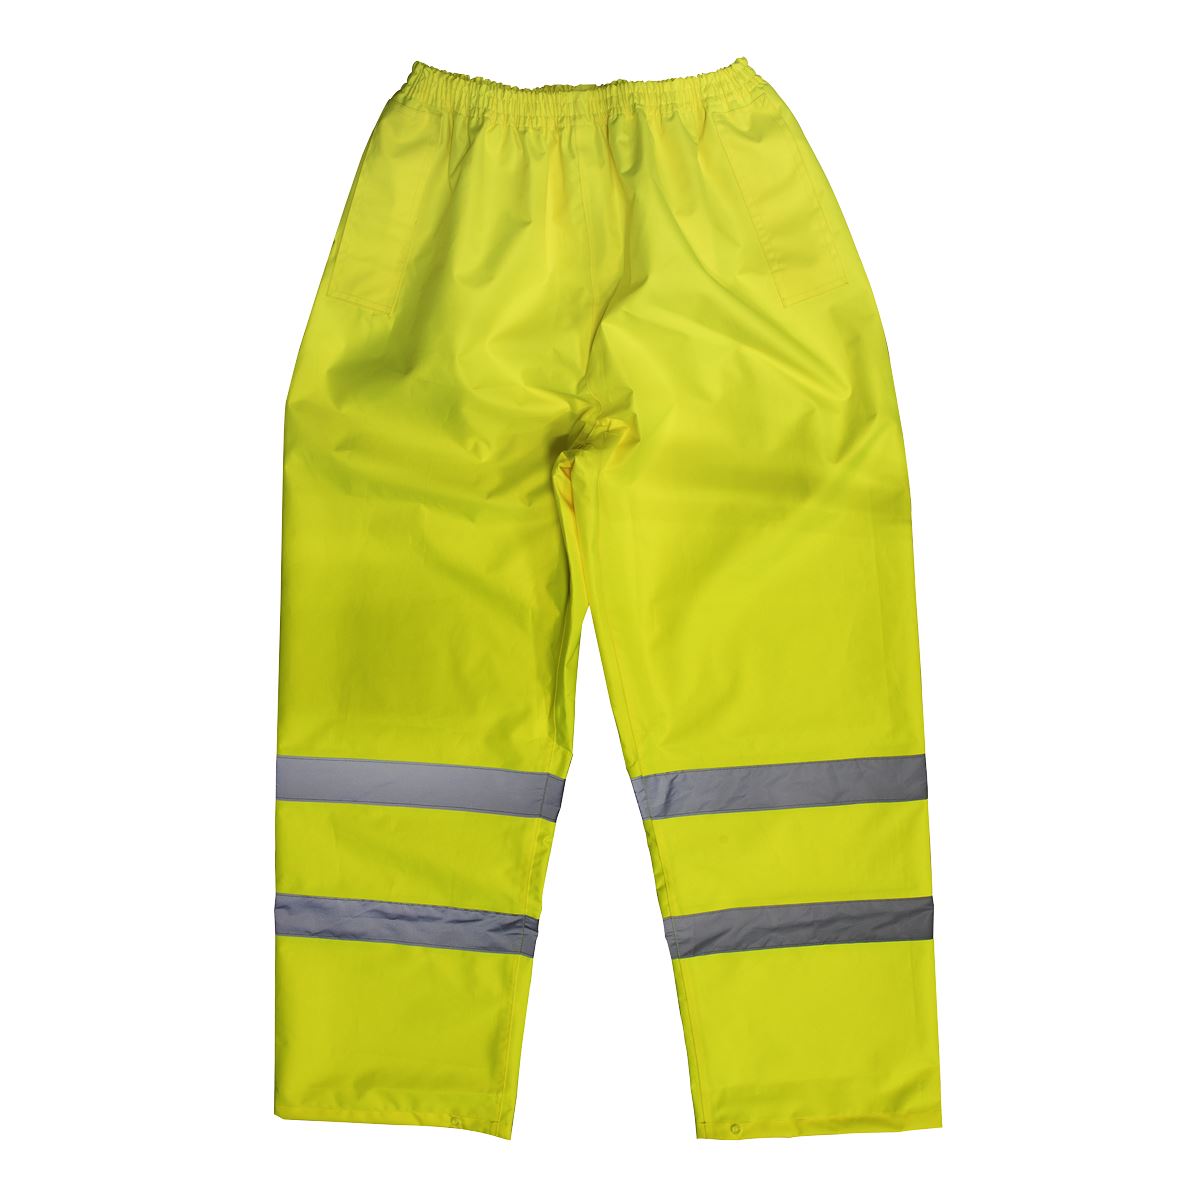 Worksafe by Sealey Hi-Vis Yellow Waterproof Trousers - Large